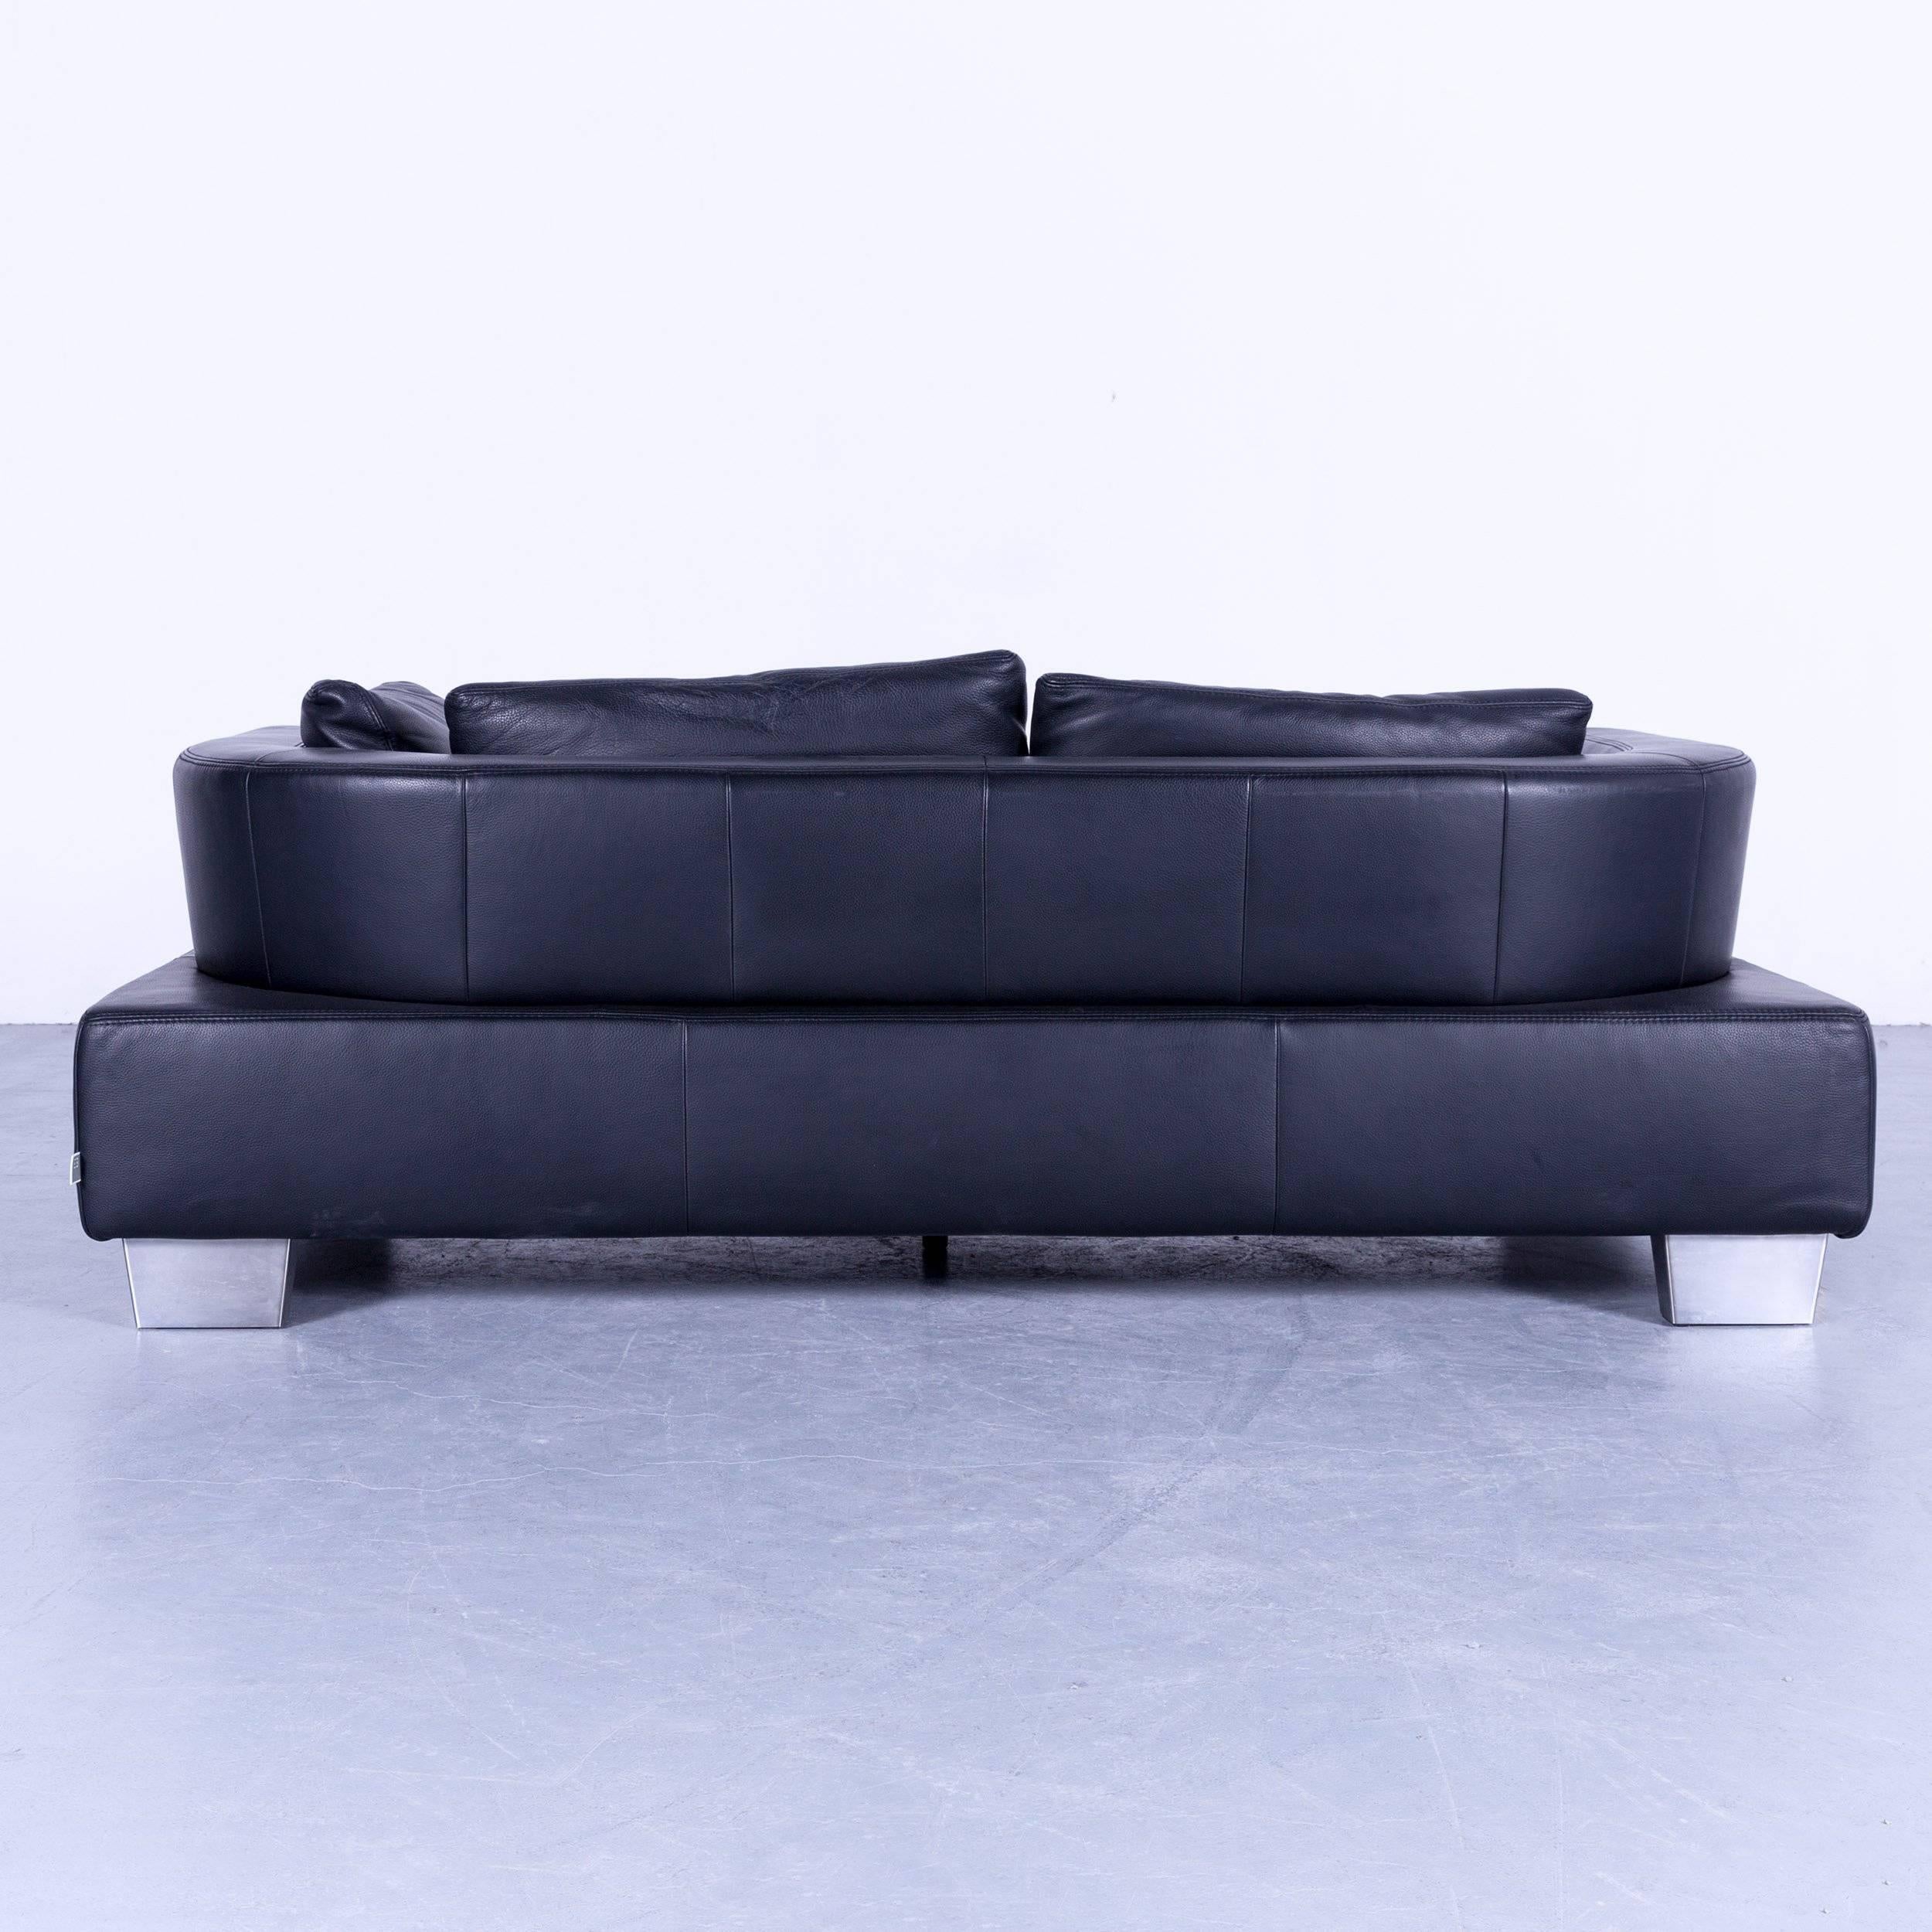 Contemporary Ewald Schillig Moon Designer Sofa Black Leather Couch Three-Seat Modern